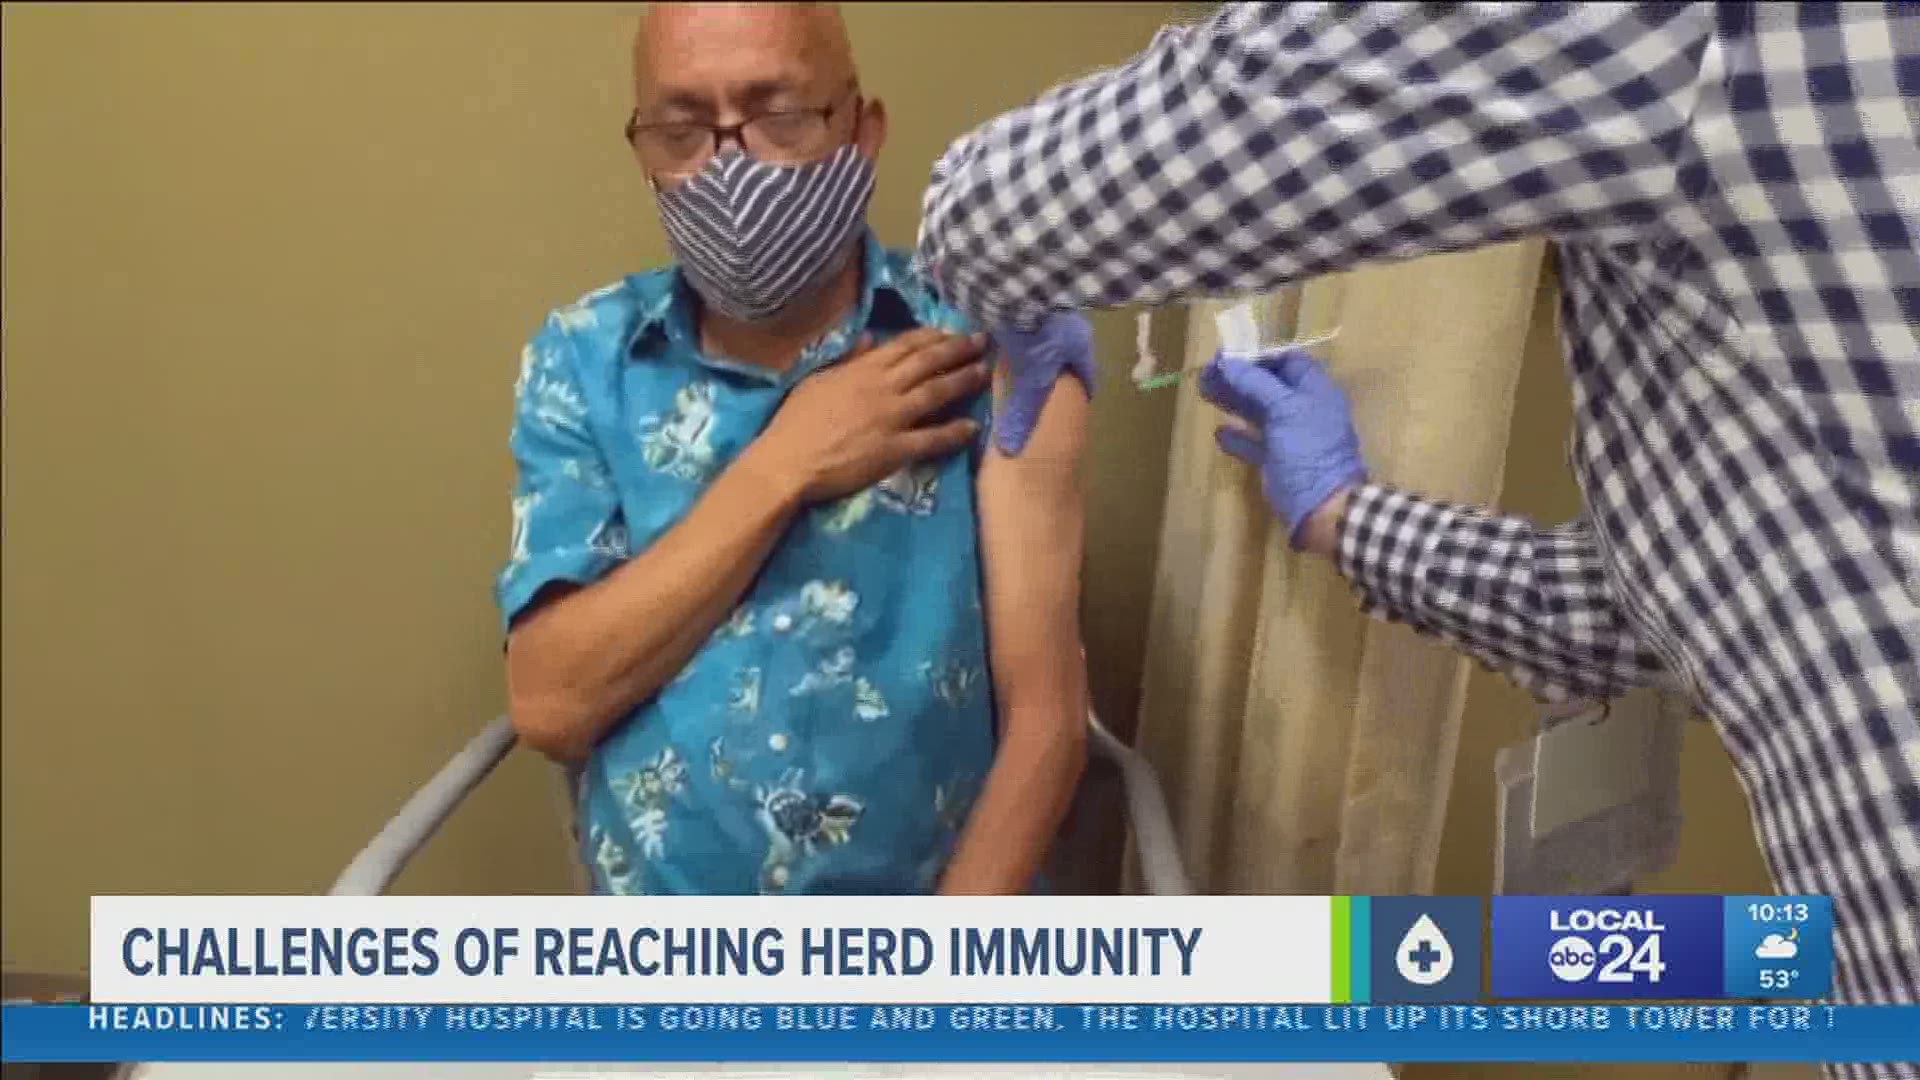 Challenges of reaching hurd immunity